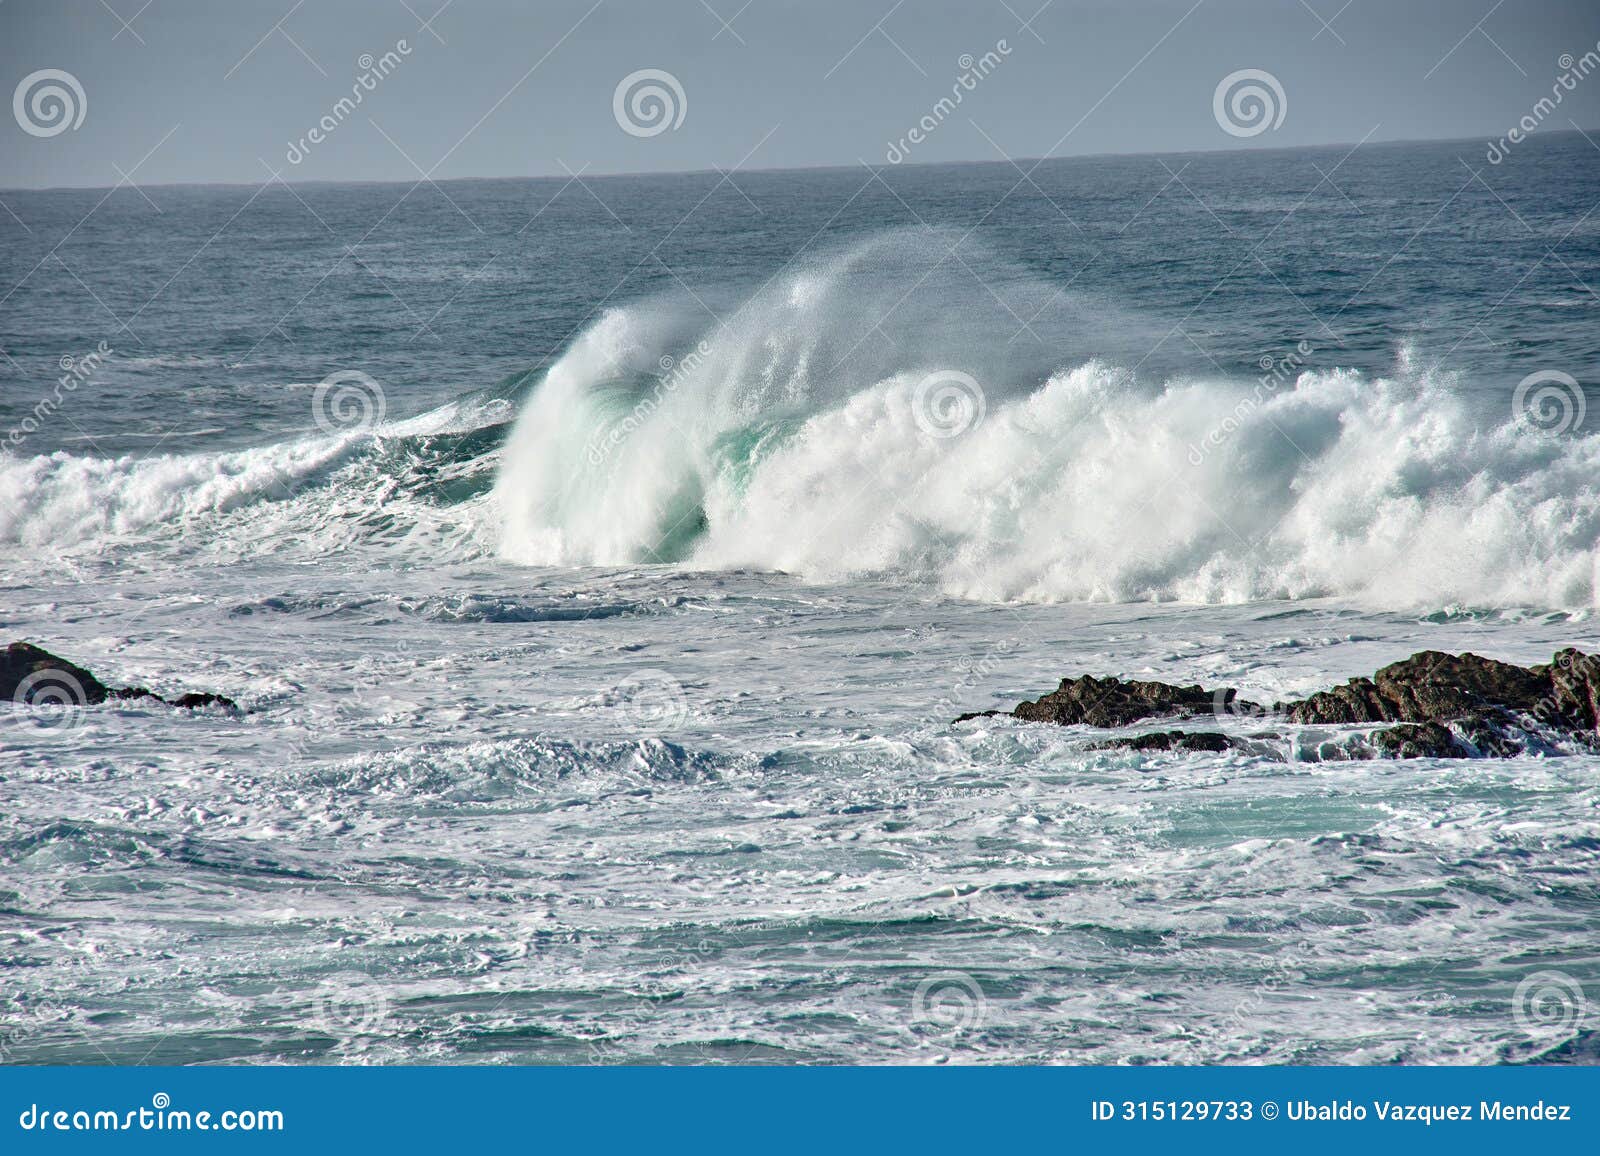 large waves breaking at the baiona breakwater, pontevedra, spain